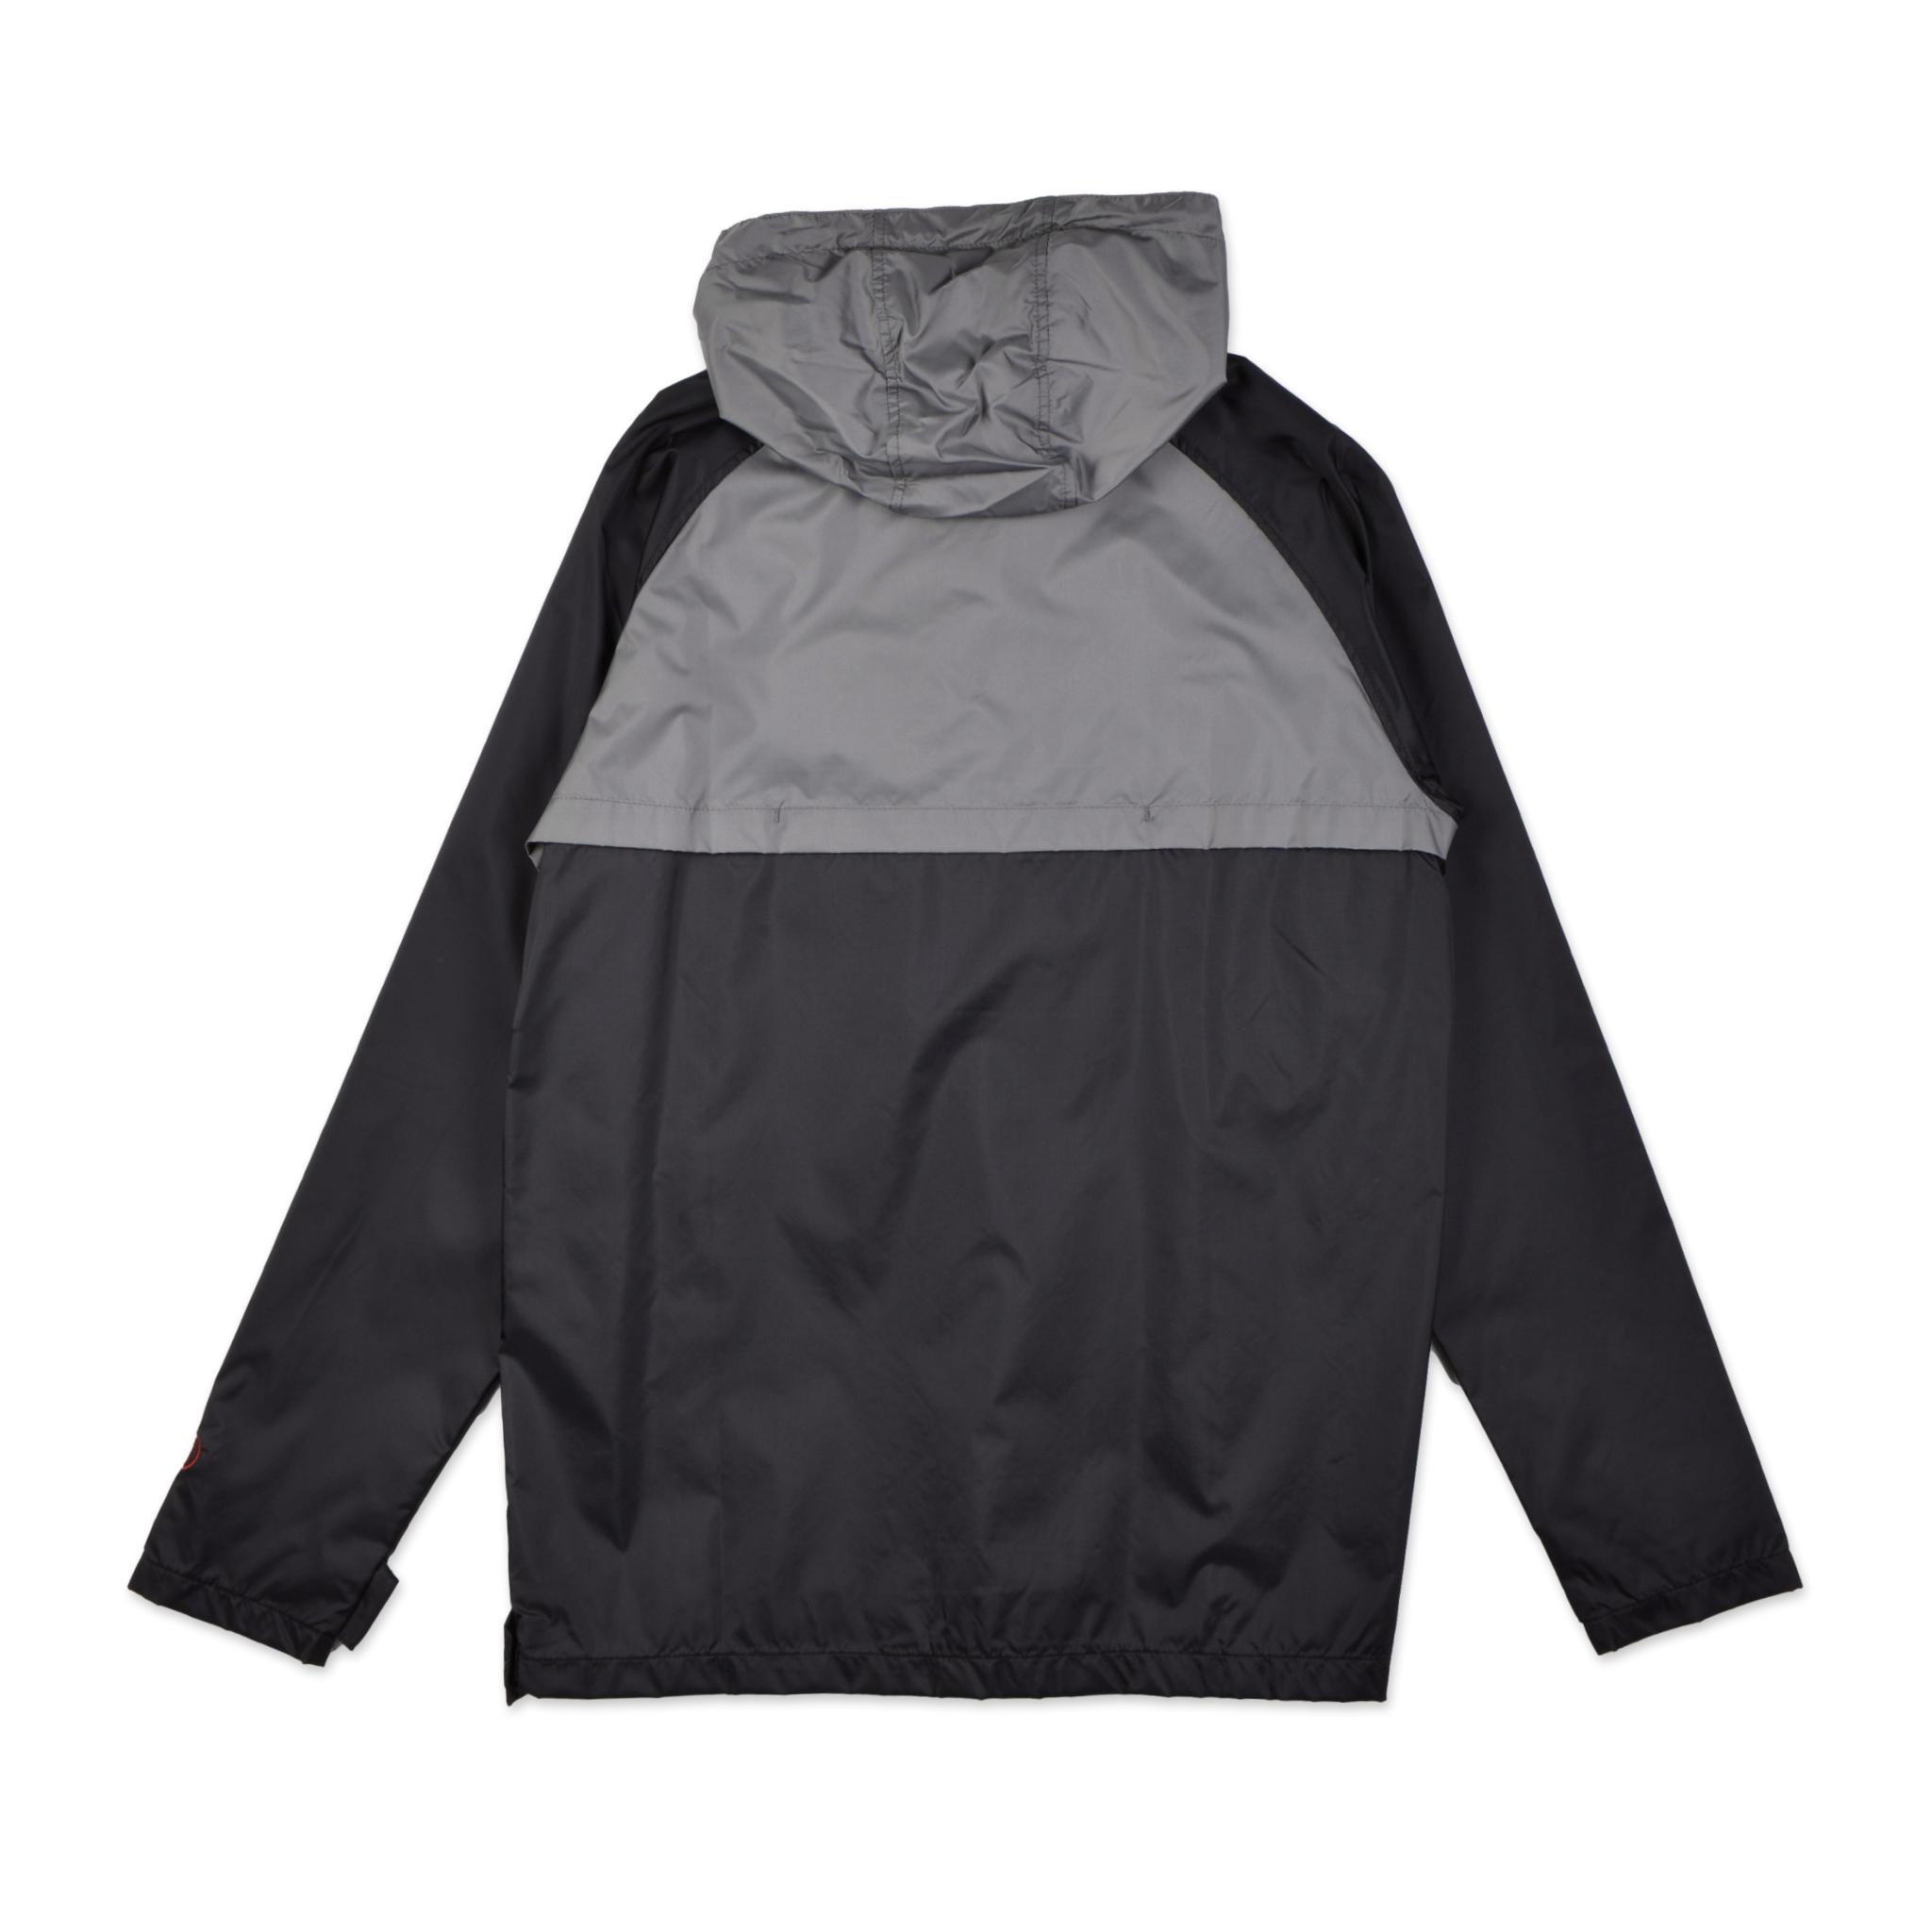 Spitfire hombre anorak jacket black/grey